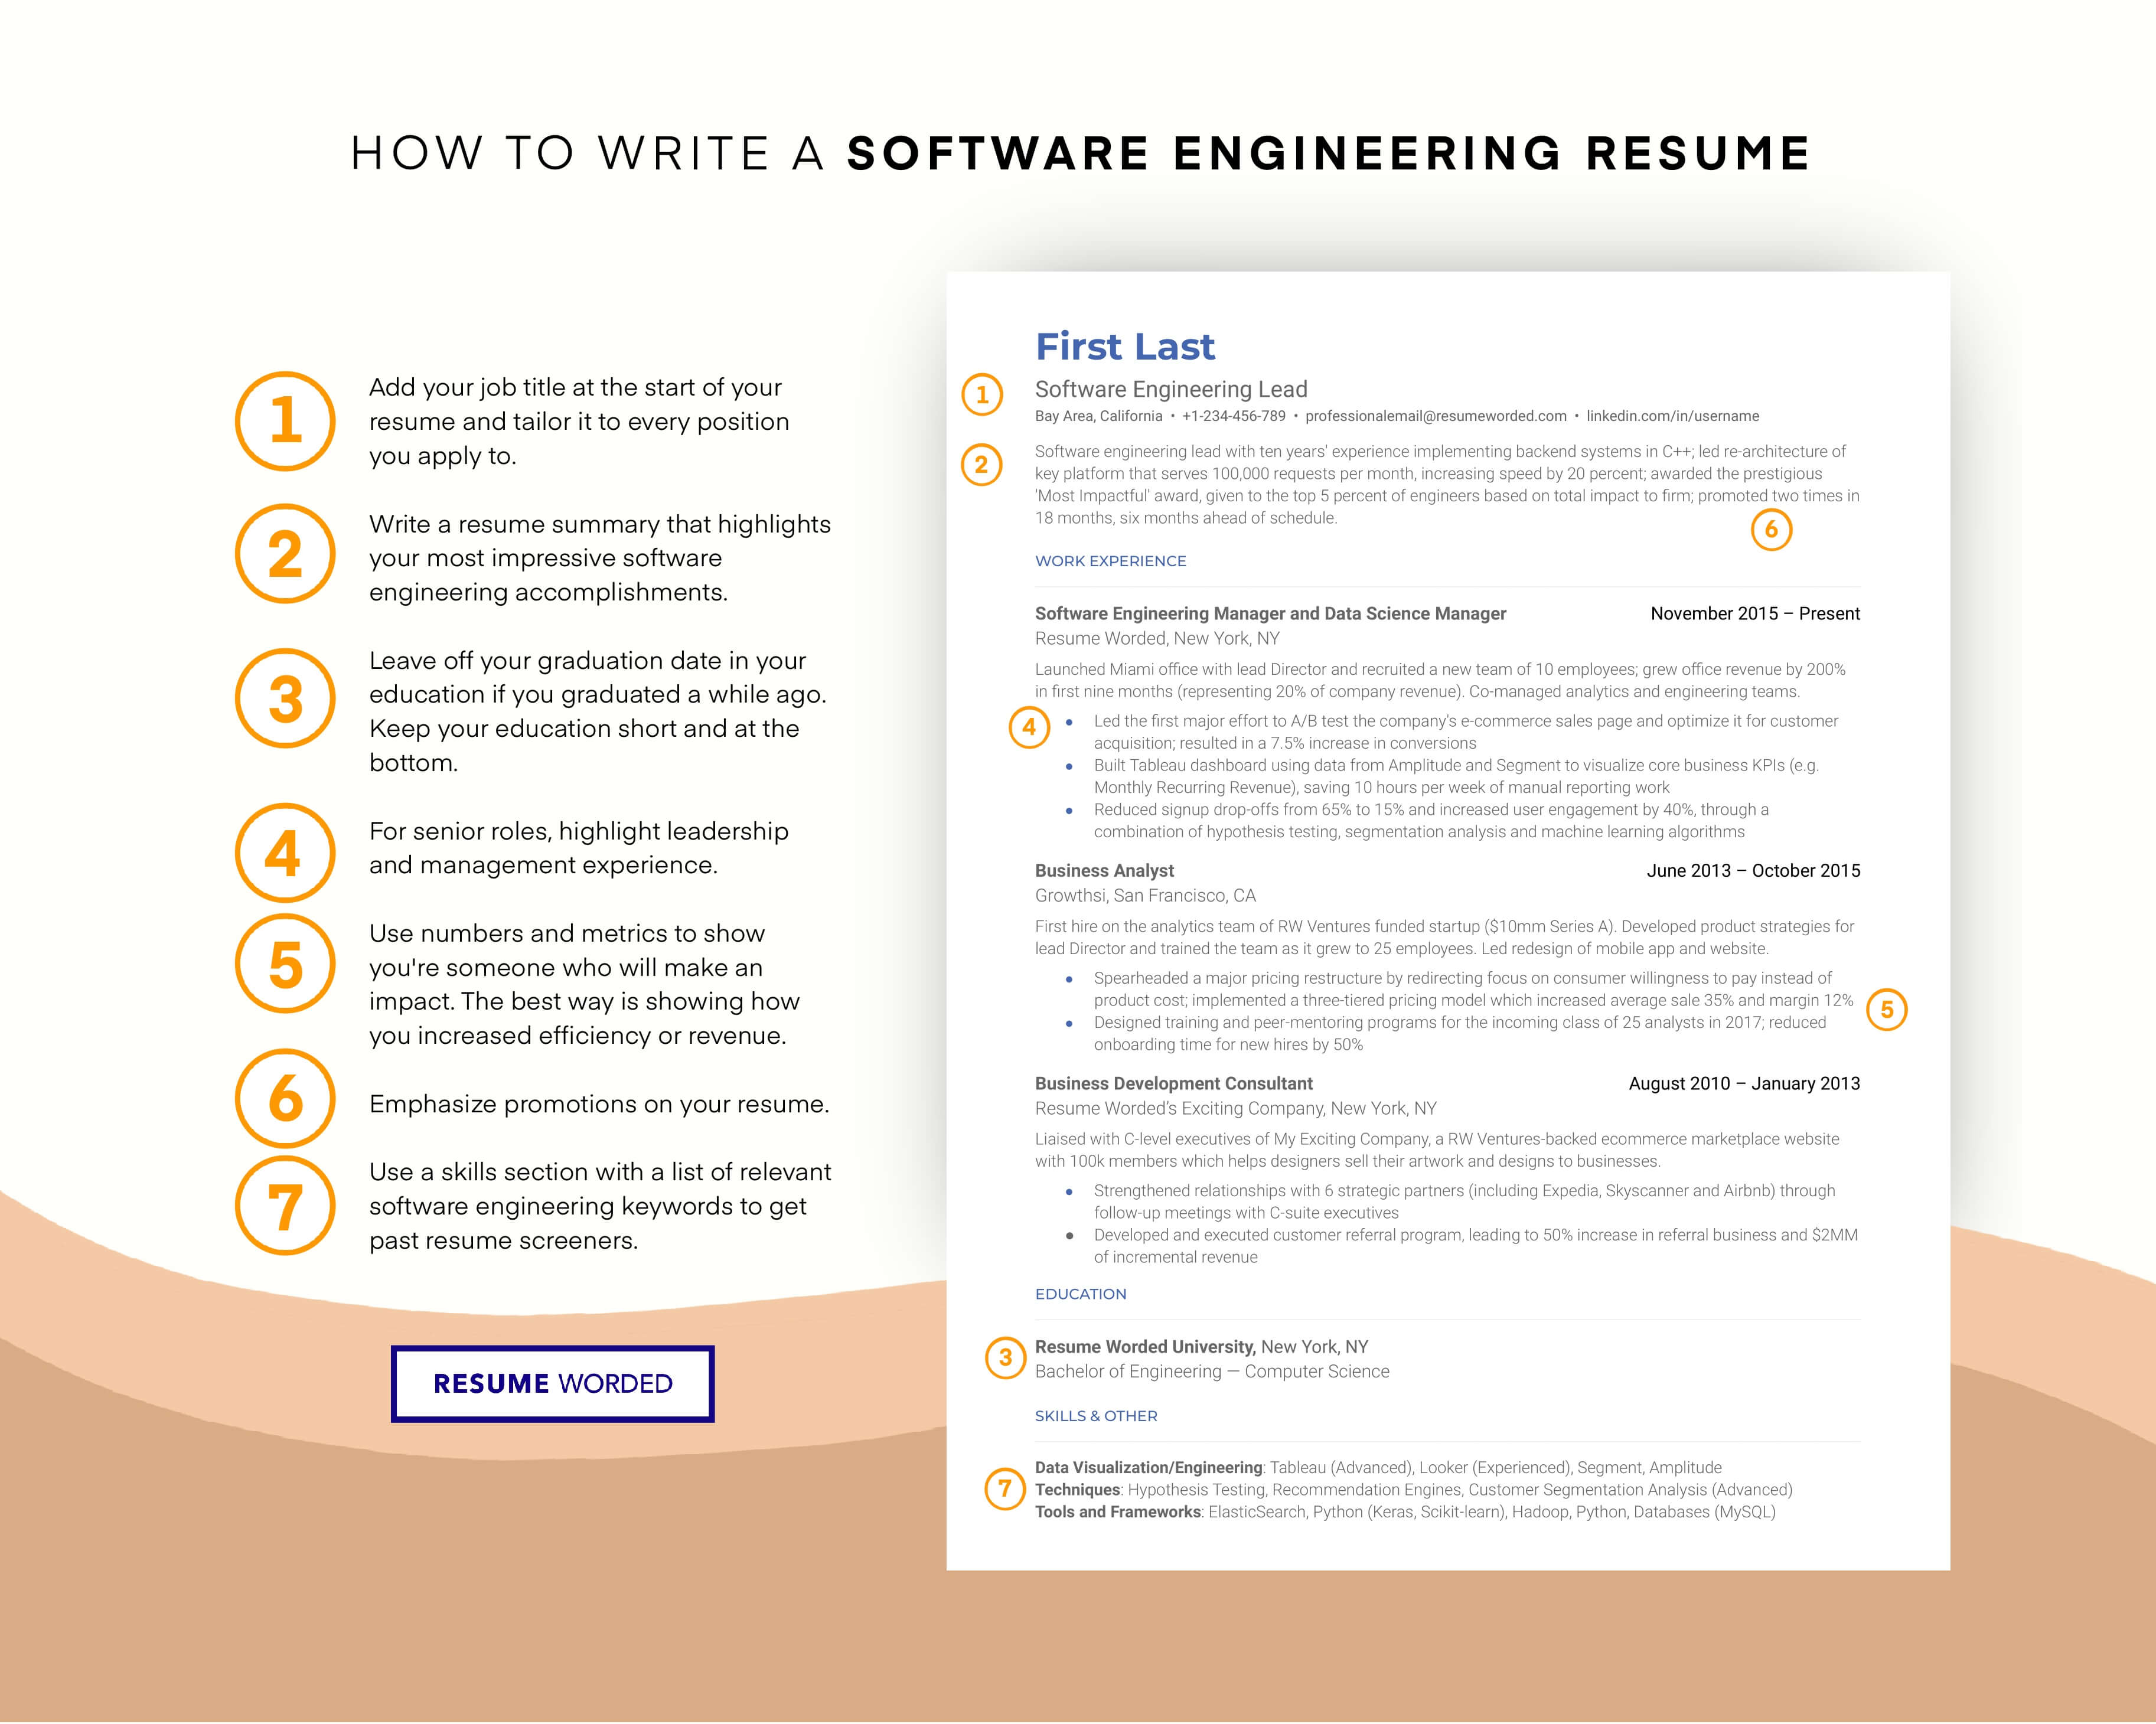 Demonstrate your understanding of software development - UX Designer (User Experience Designer) Resume